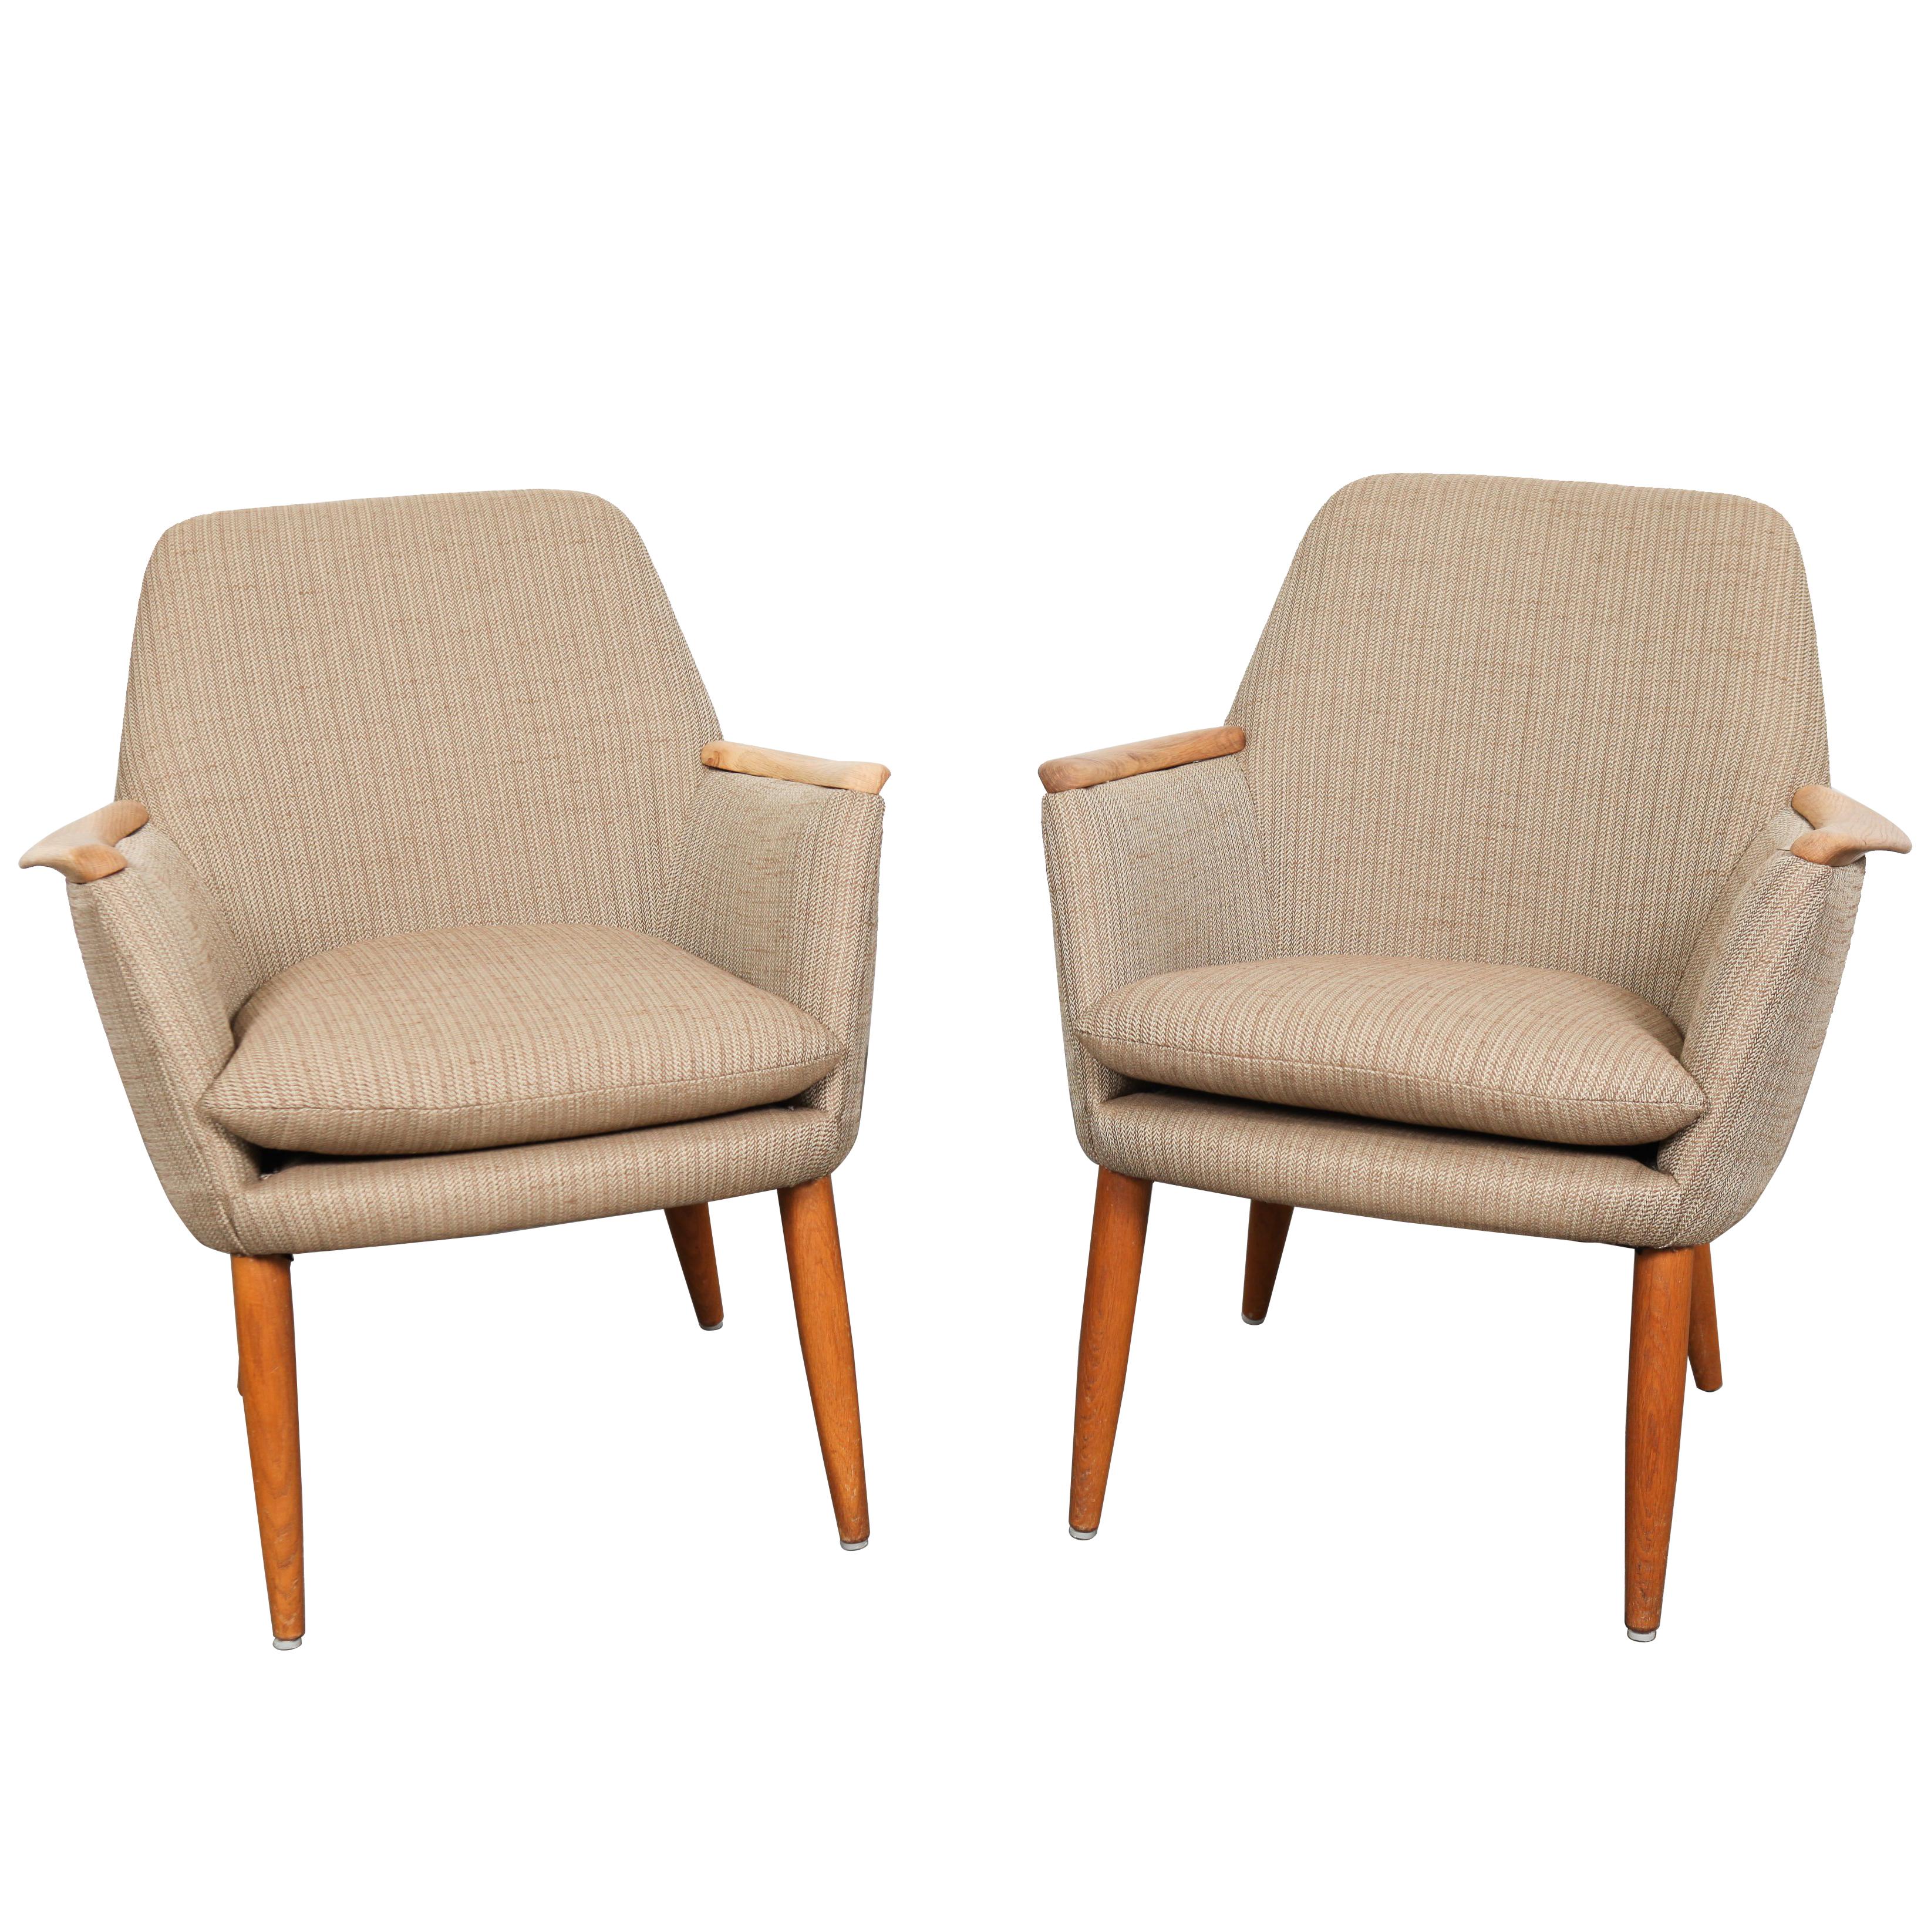 Mid-Century Modern Swedish Lounge Chairs